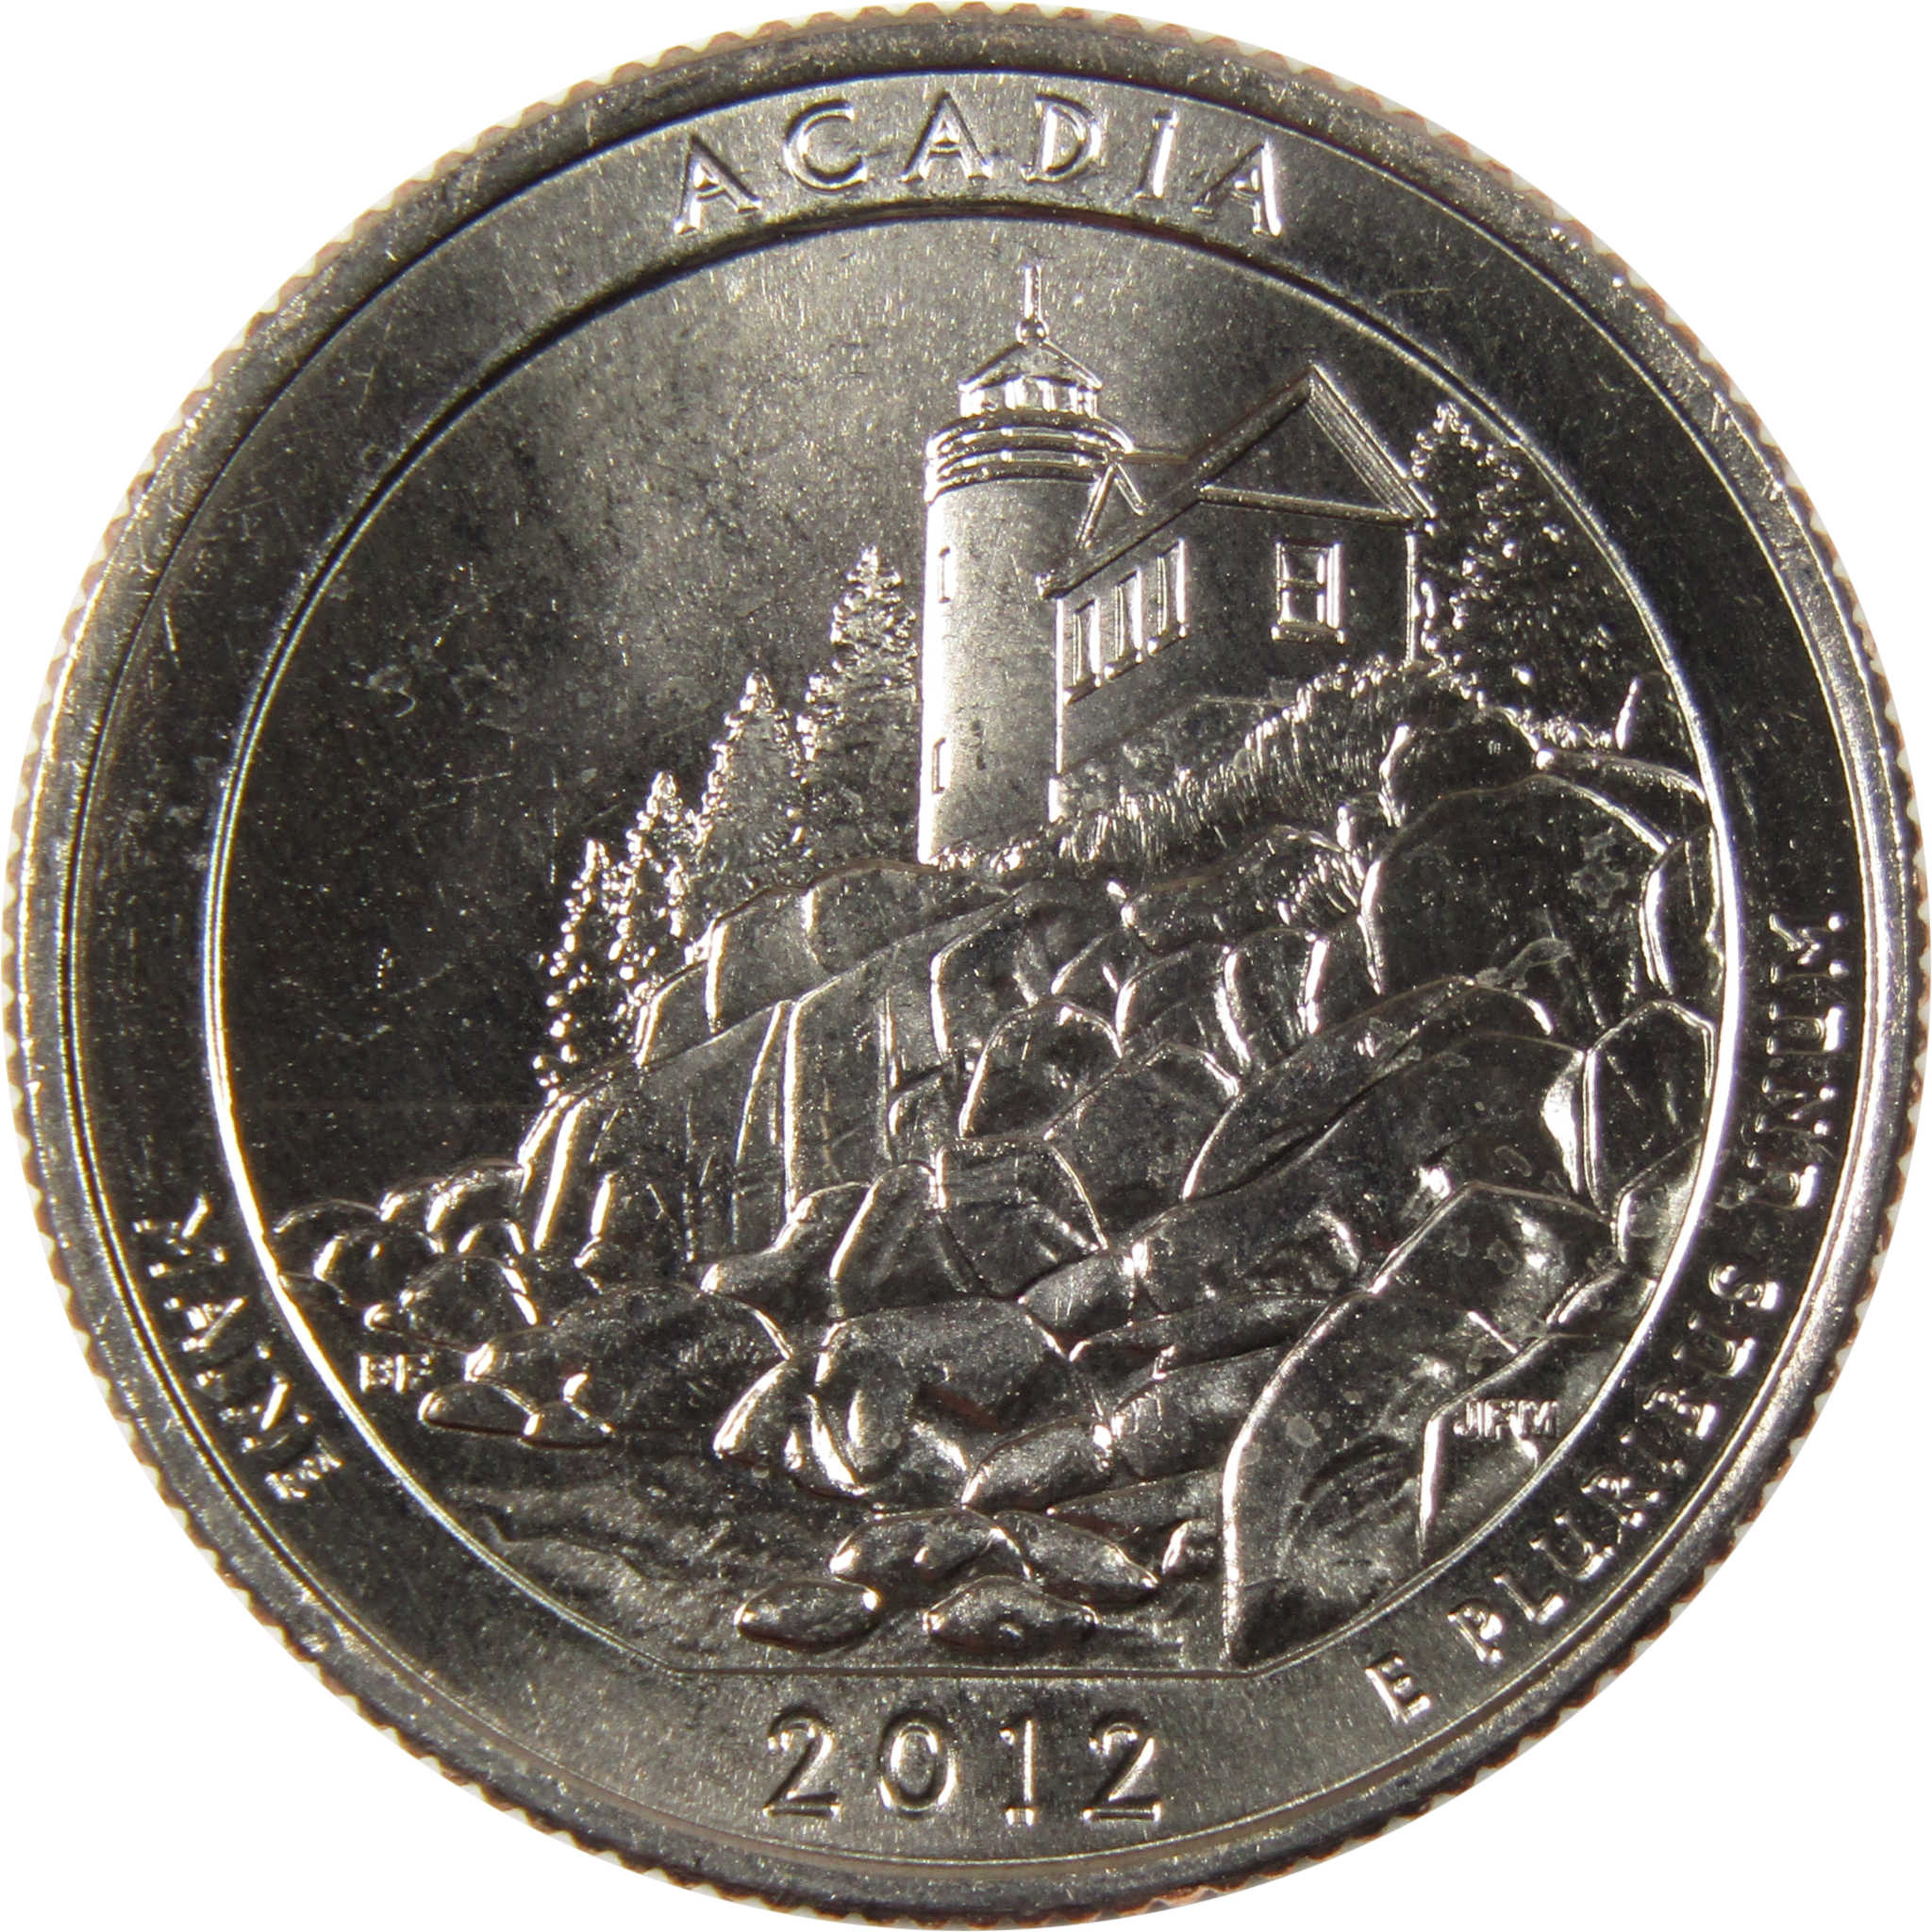 2012 S Acadia National Park Quarter BU Uncirculated Clad 25c Coin